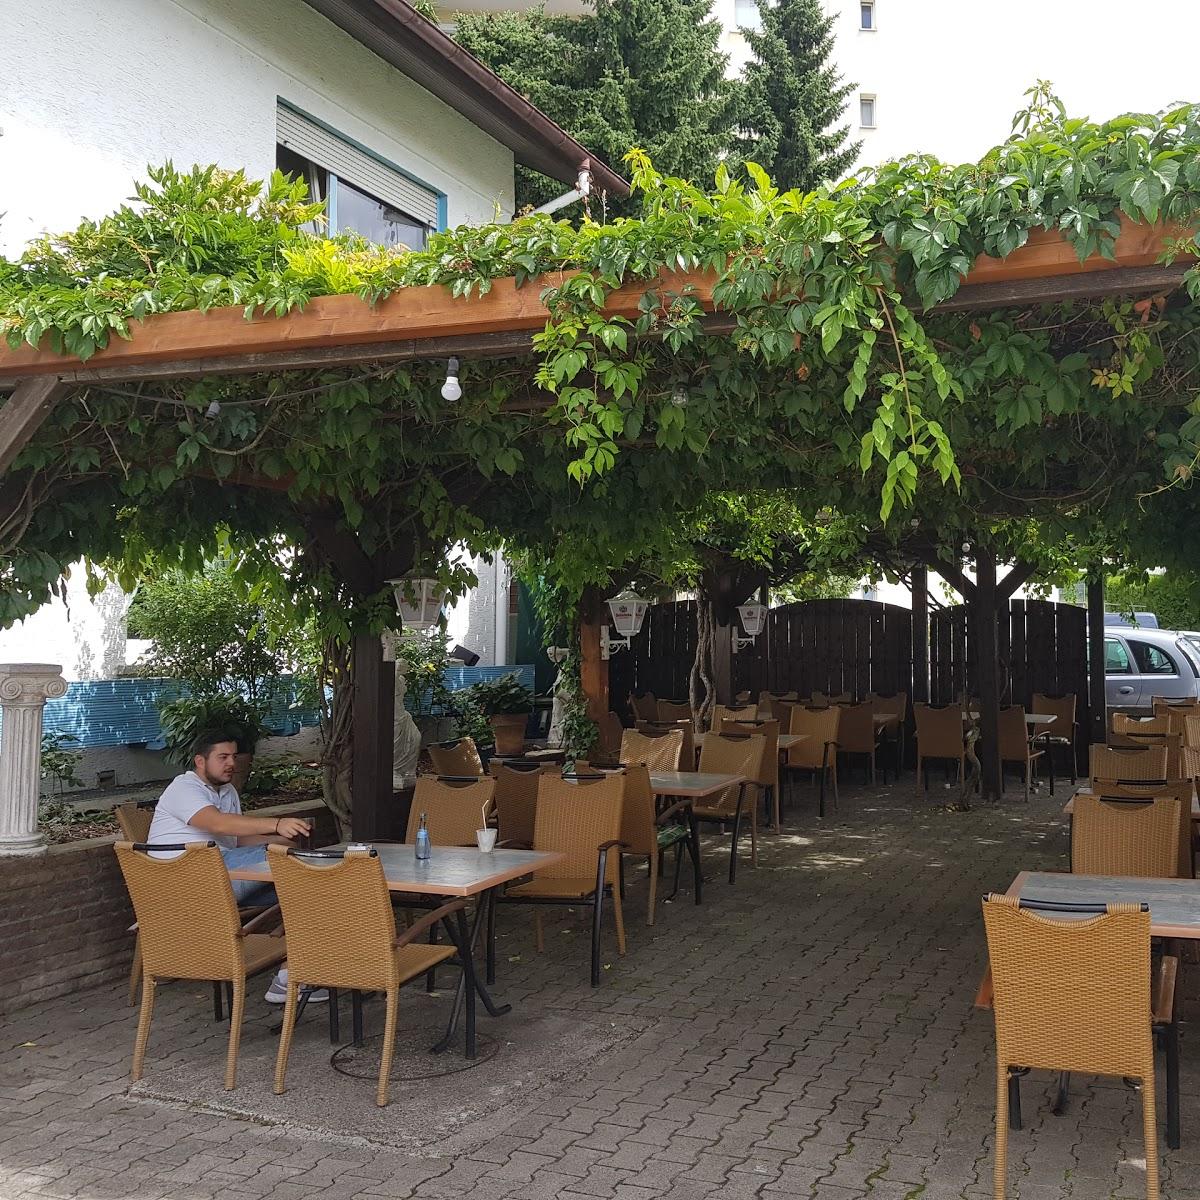 Restaurant "El Greco bei Janni" in  Eppingen